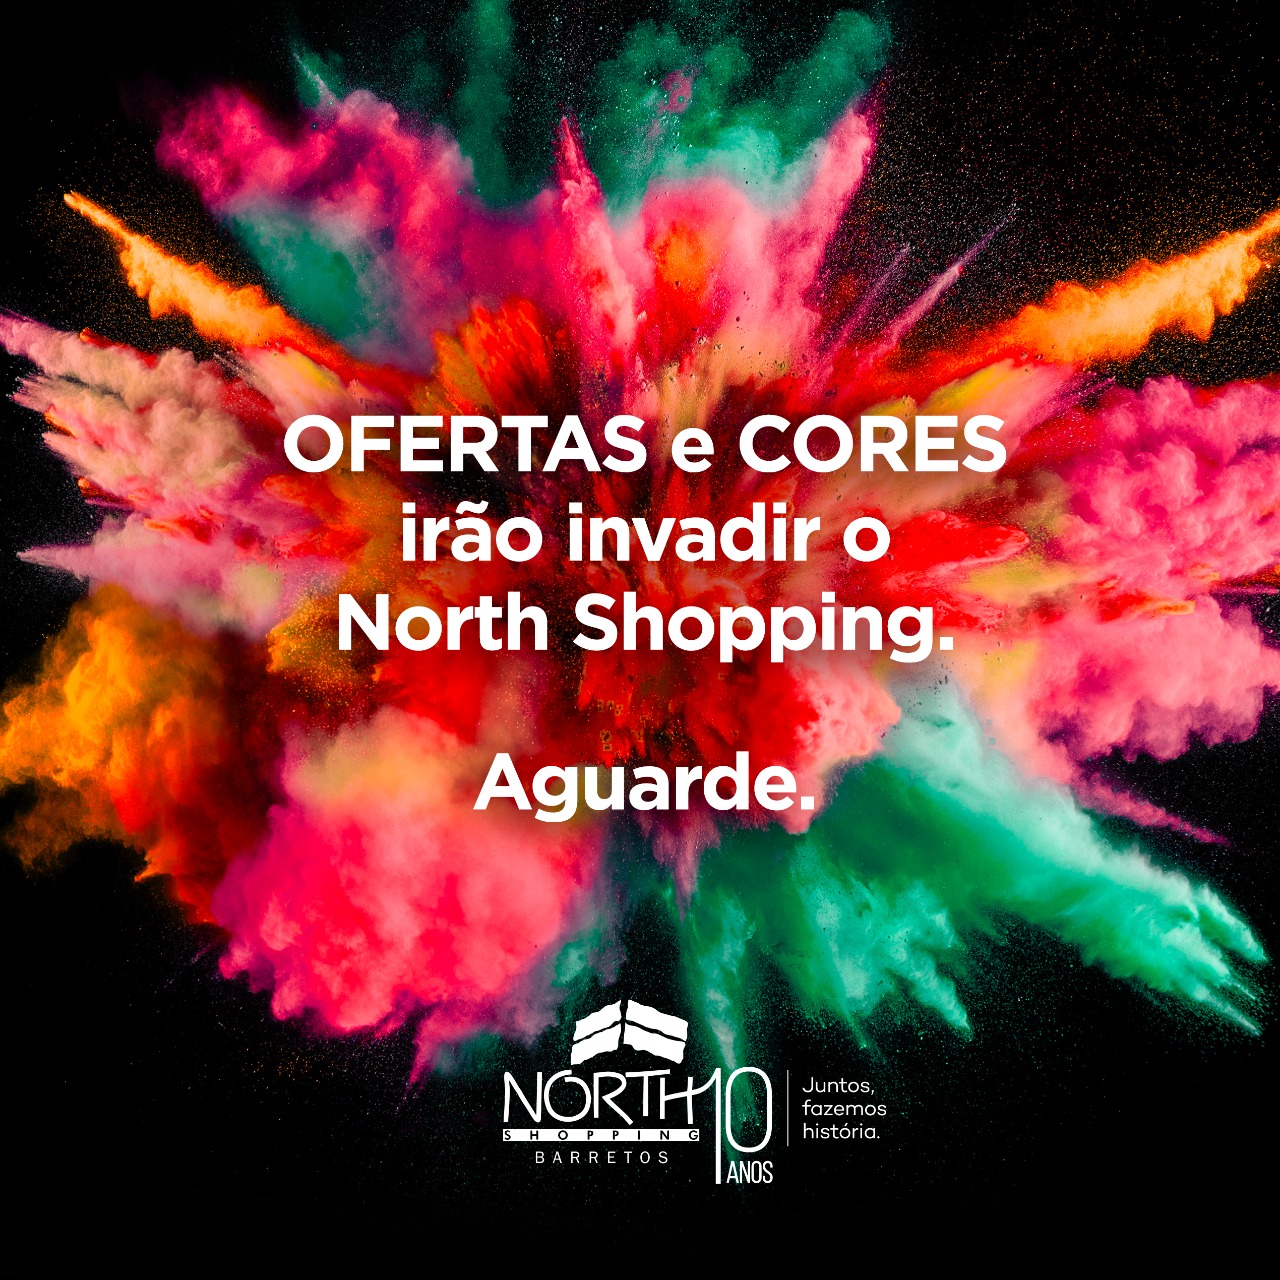 North Shopping Barretos realiza Black Friday de 27 a 29 de novembro